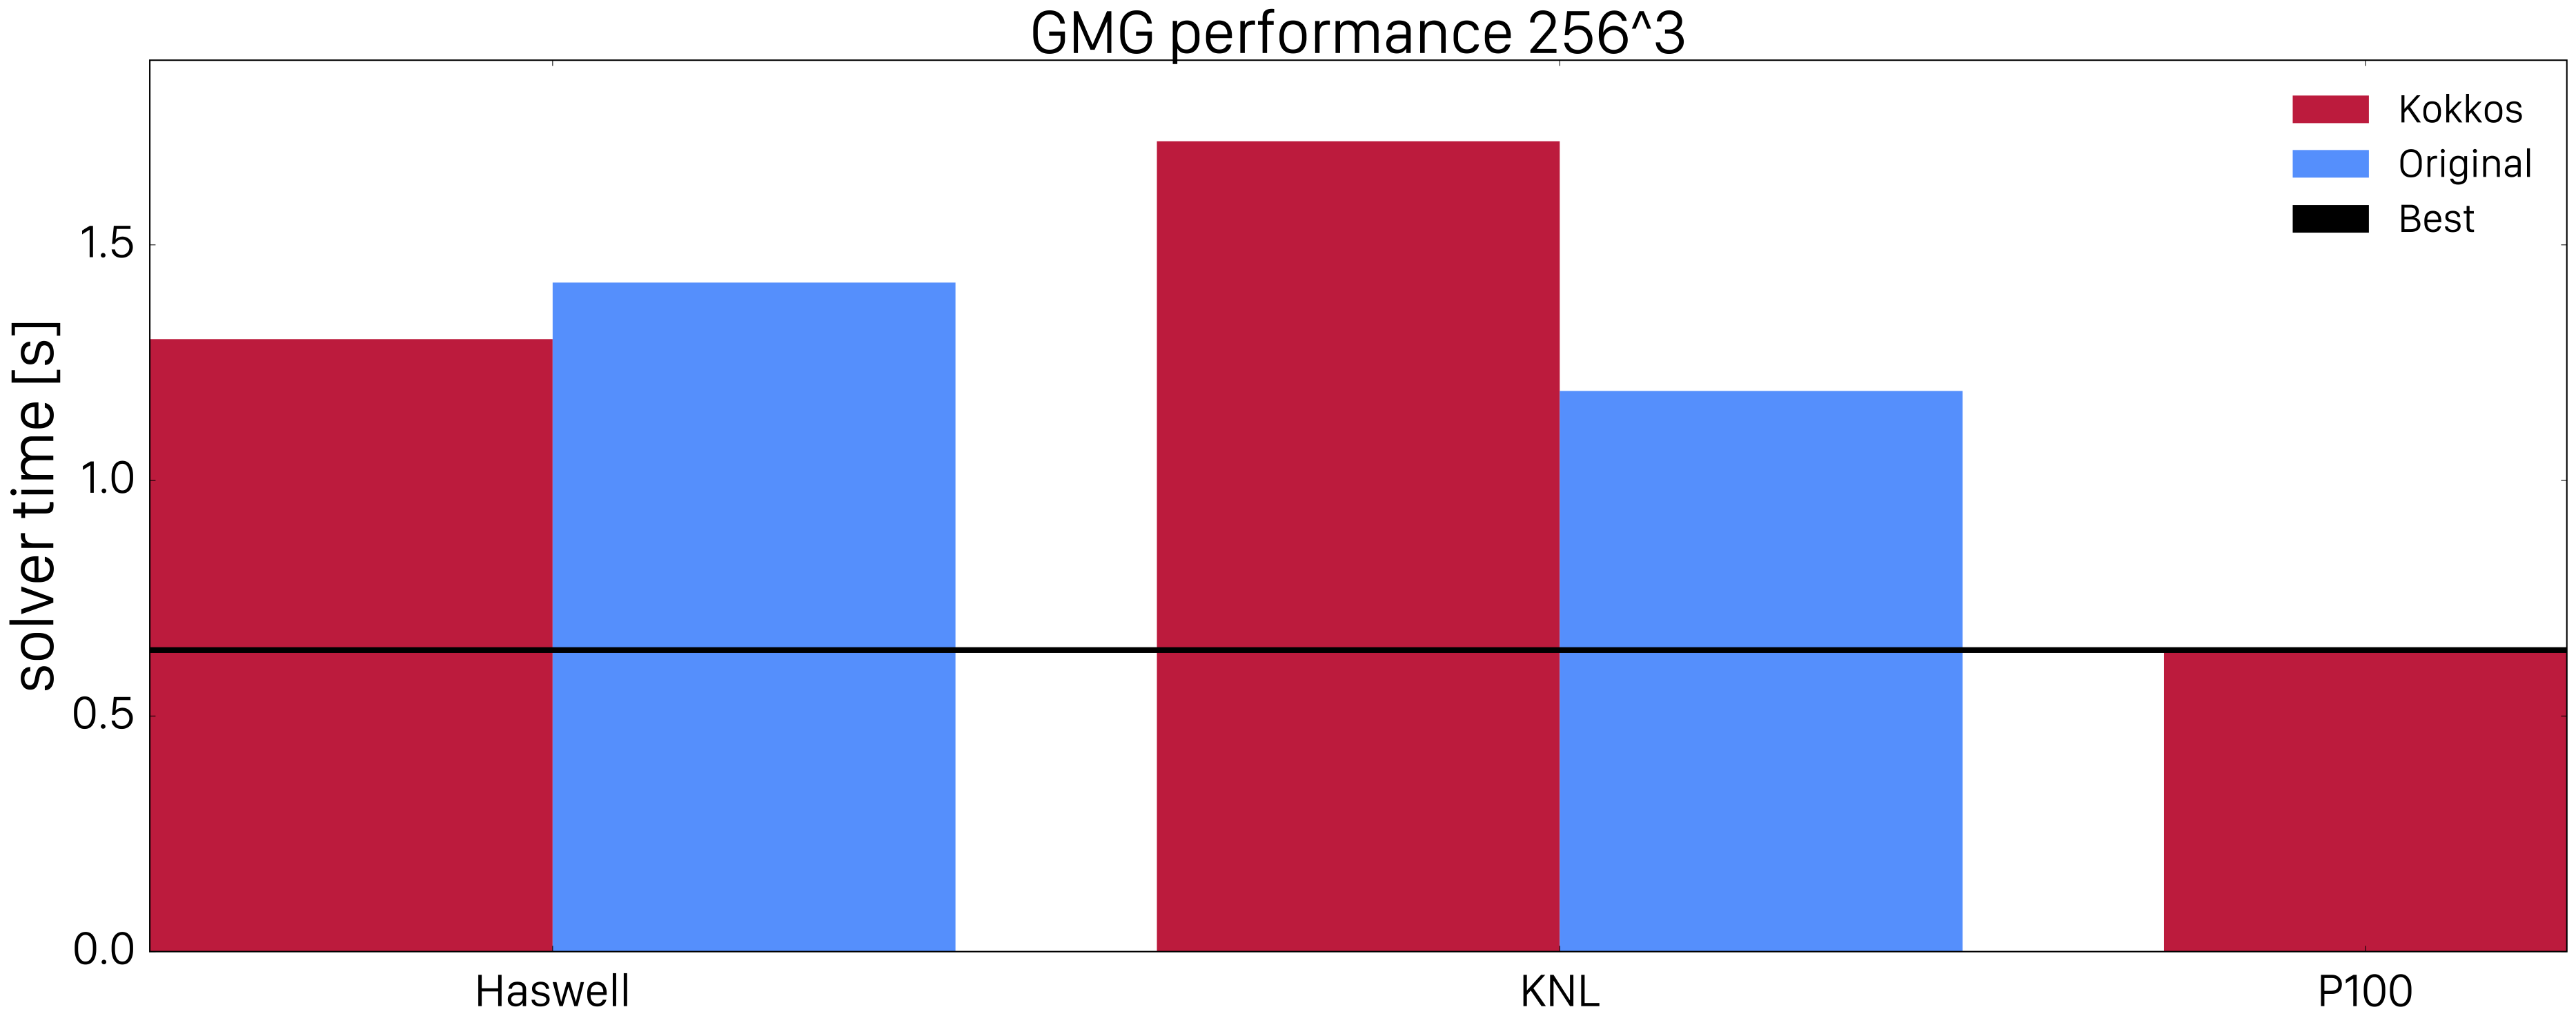 GMG performance 256